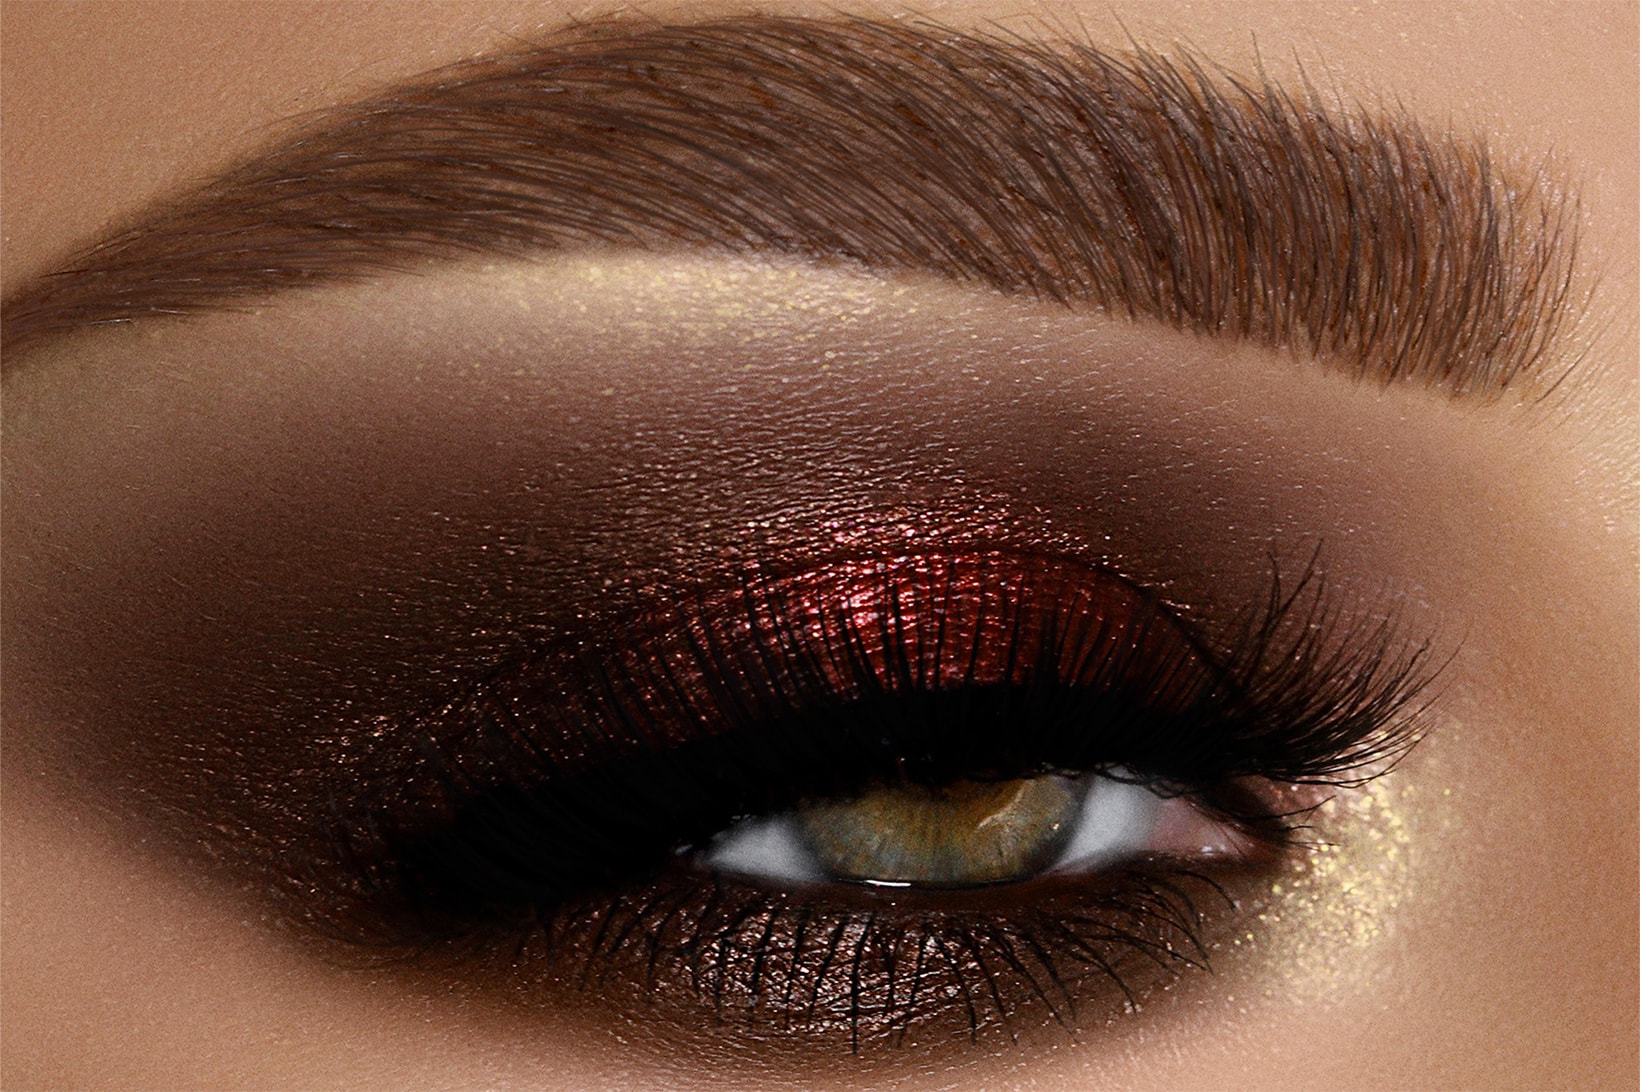 pat mcgrath star wars collaboration eyeshadows makeup beauty eyelashes glitter 